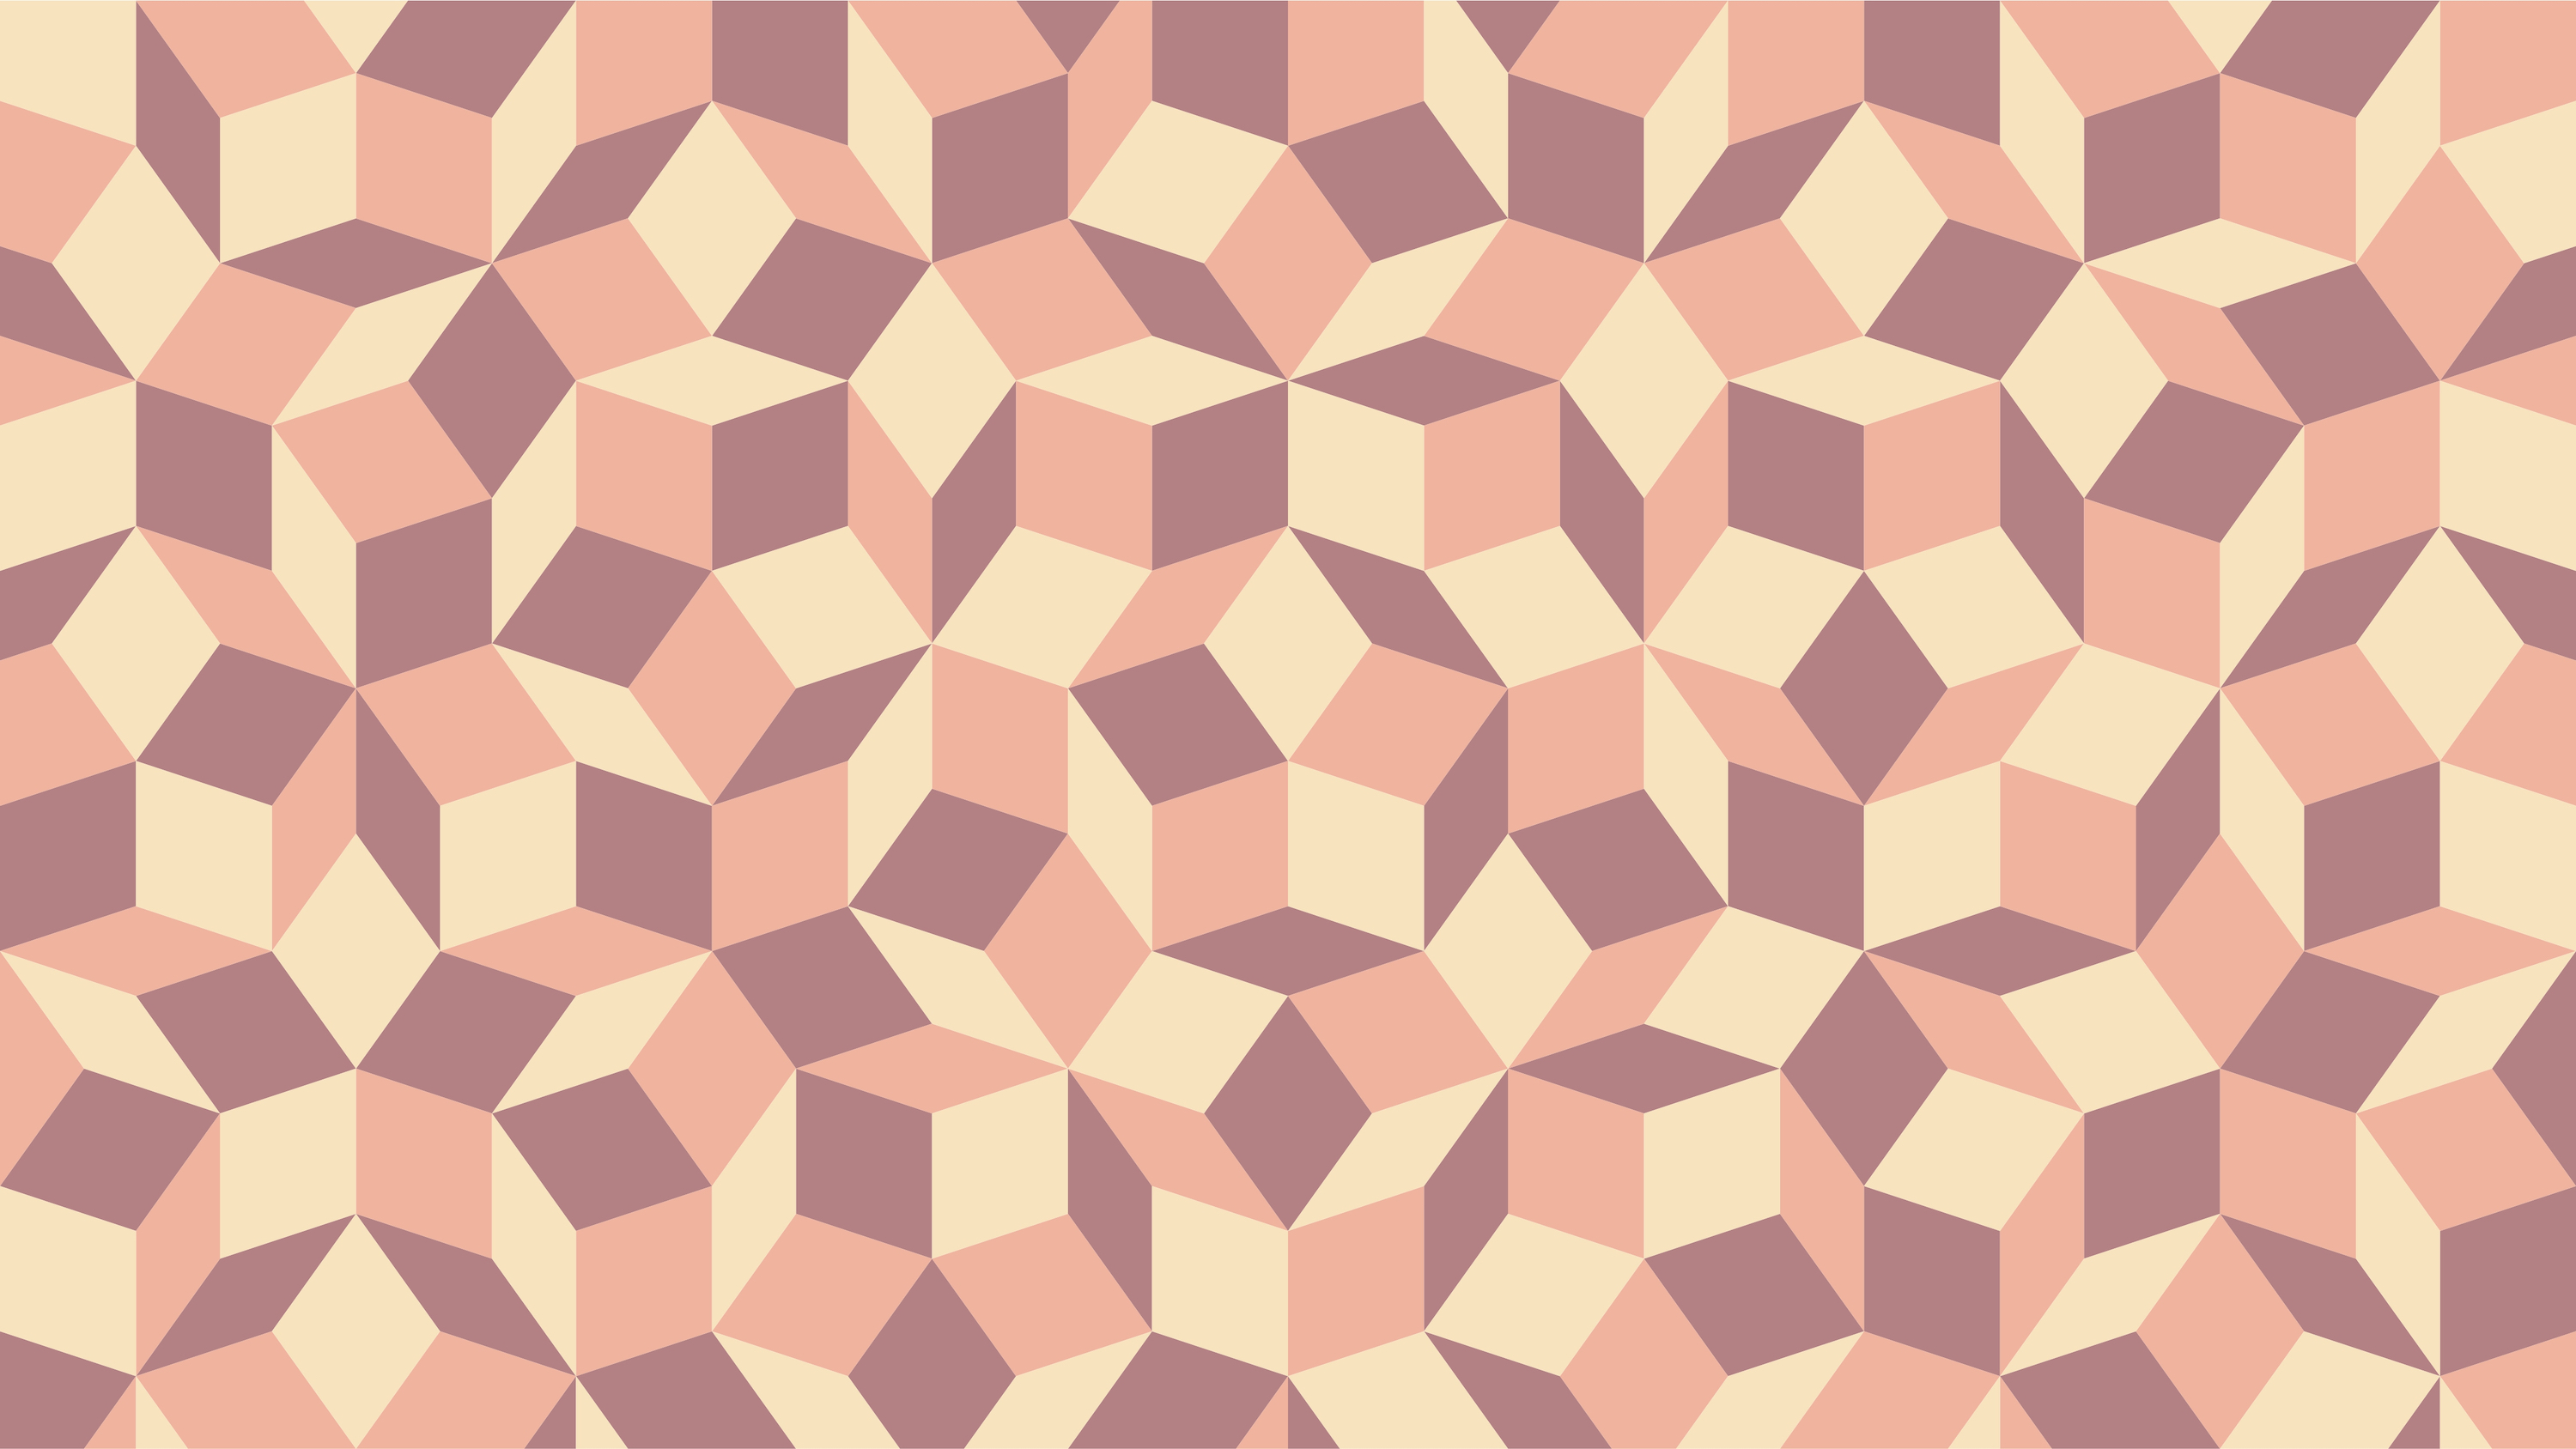 Penrose tiling example